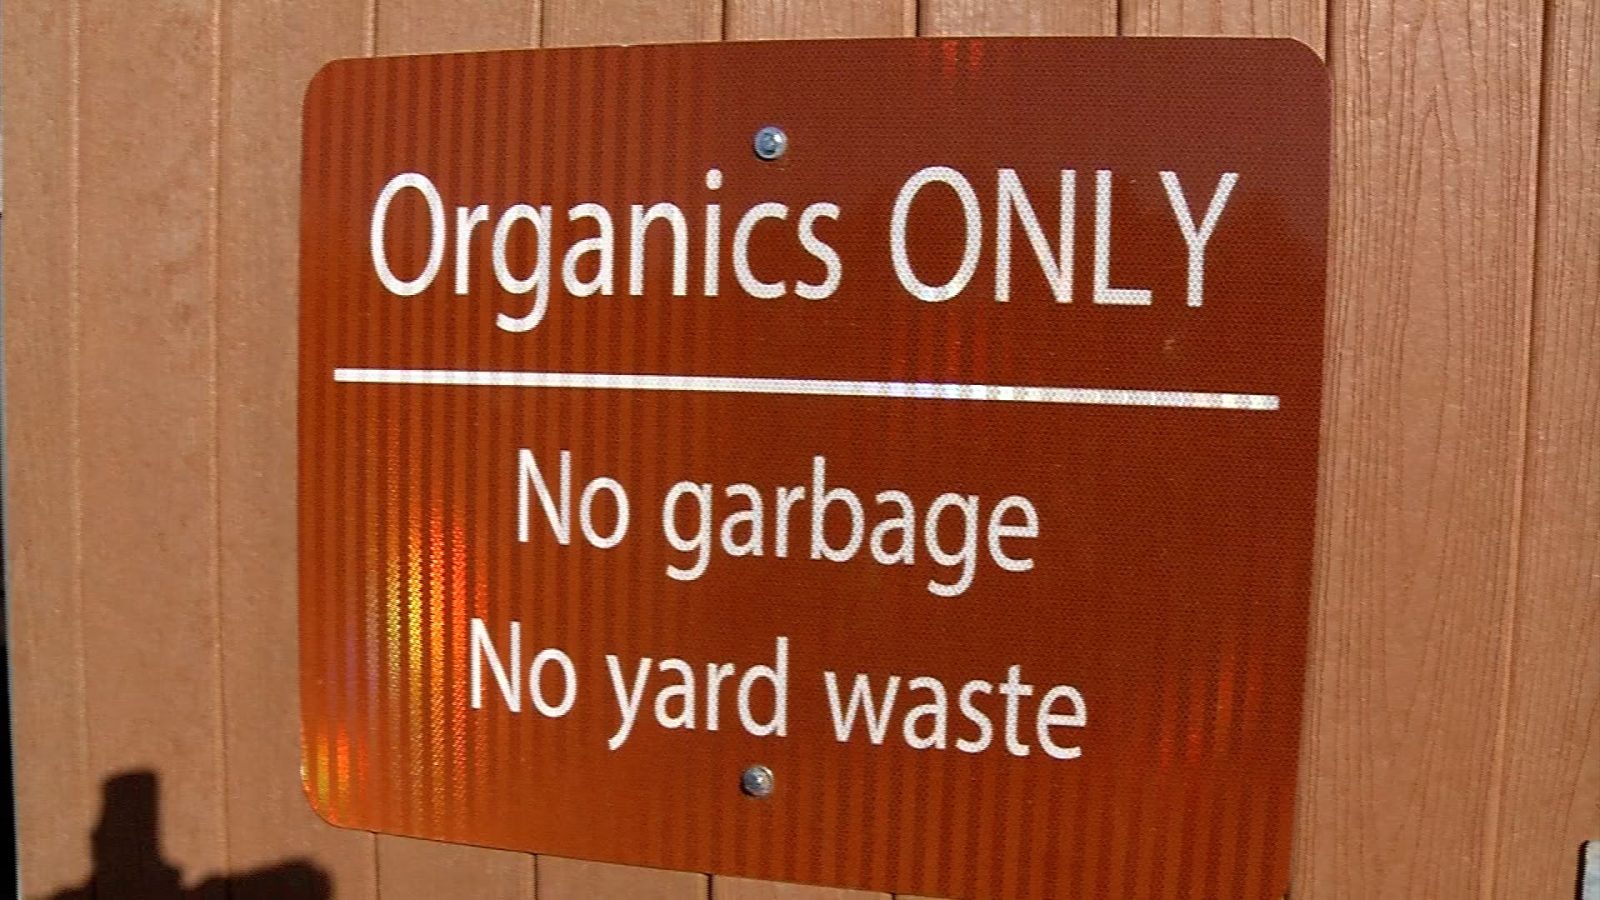 Organics recycling